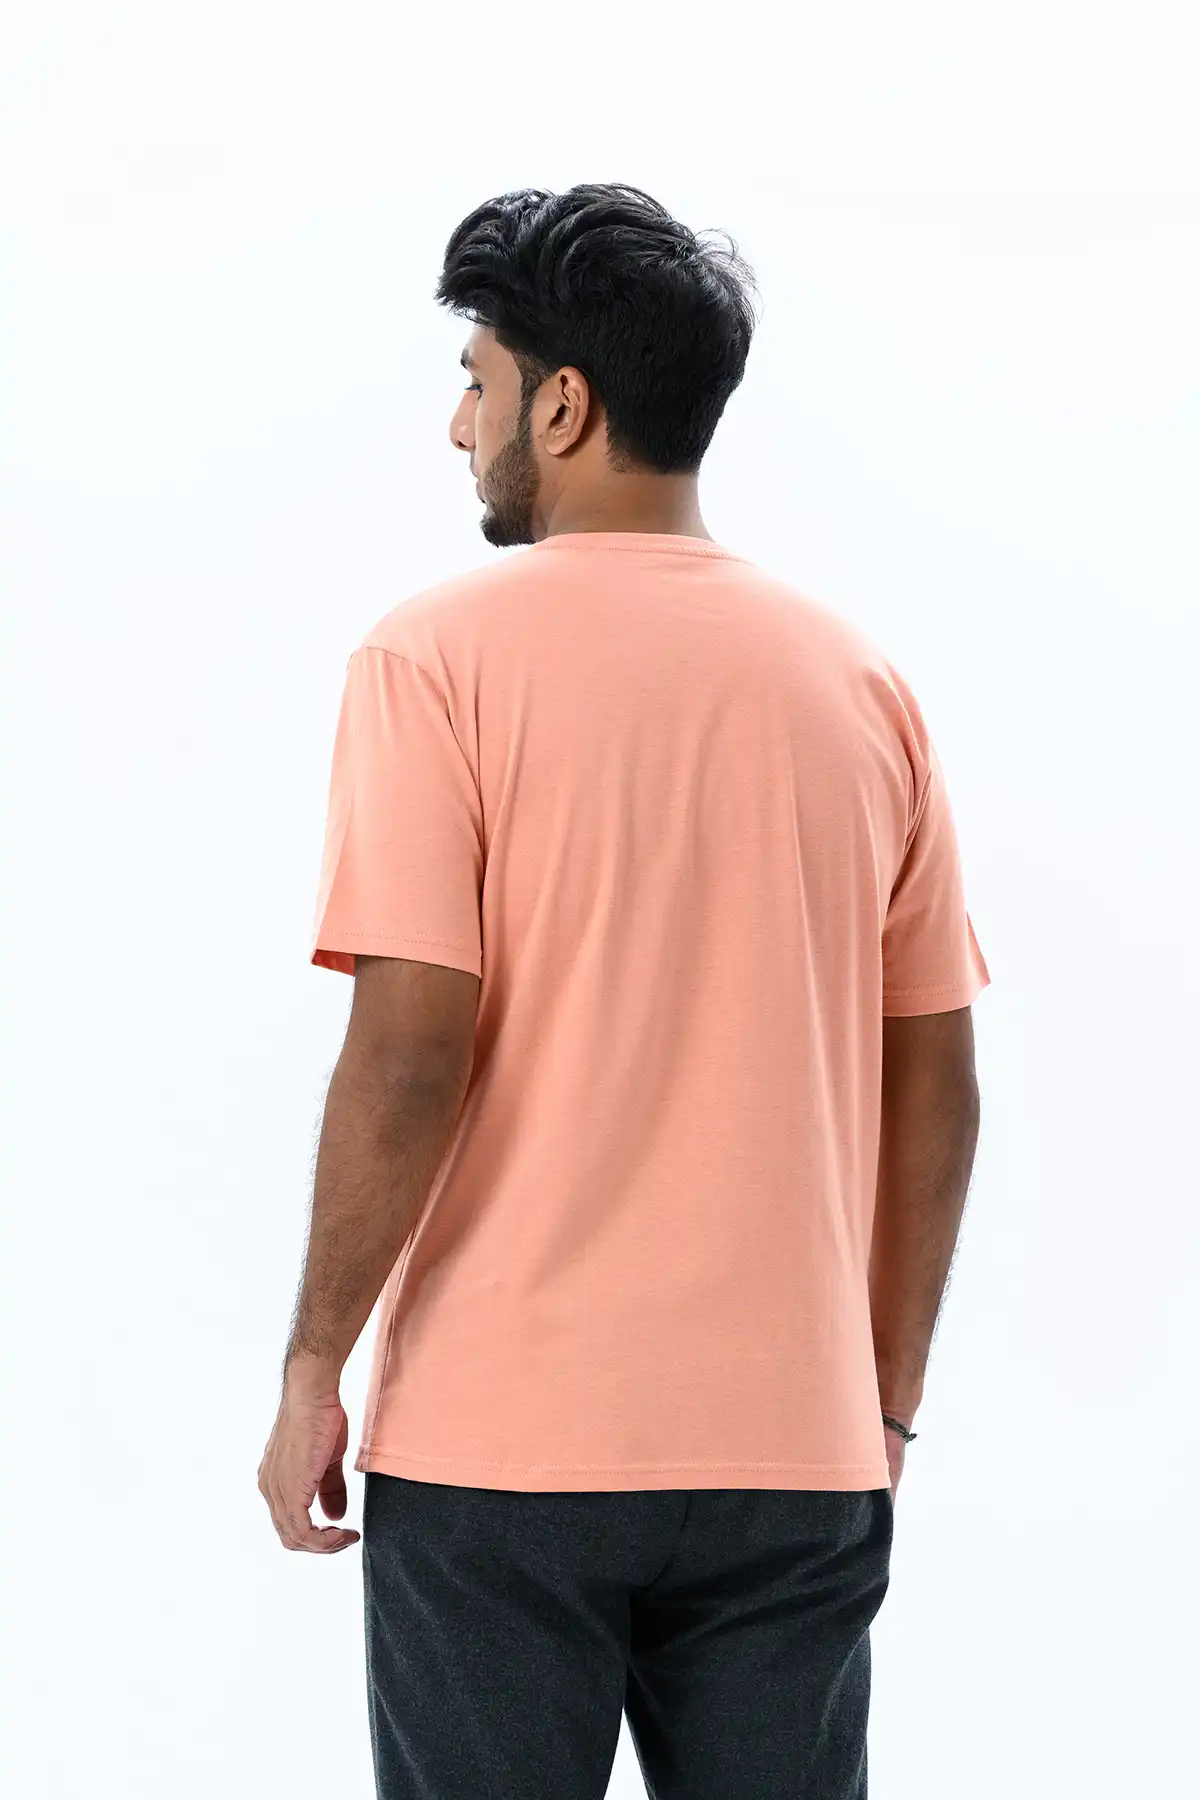 Unisex Crew Neck Cotton T-Shirt - Salmon Pink